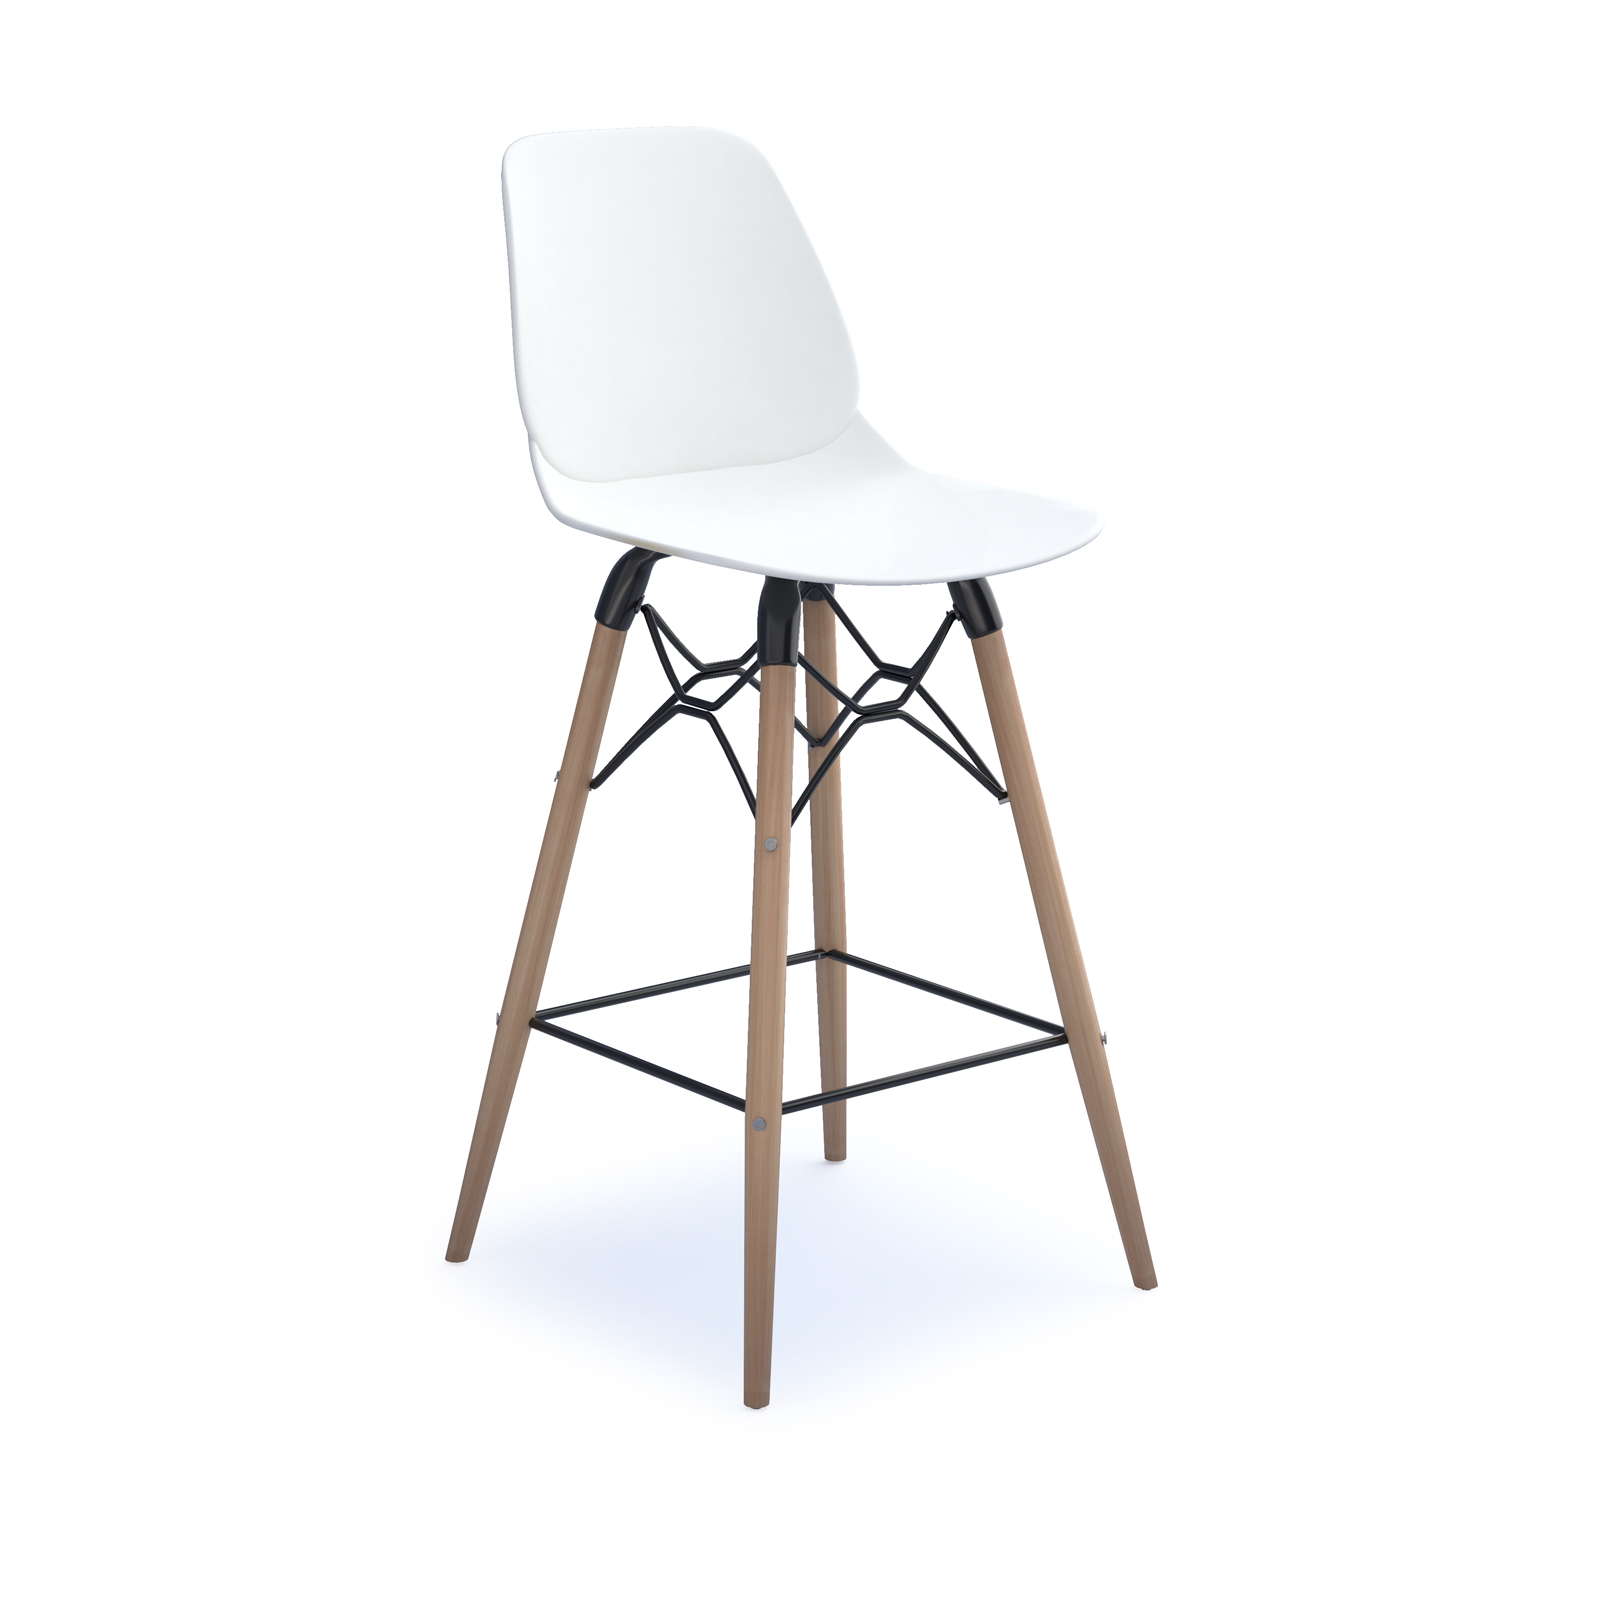 Strut multi-purpose stool with natural oak frame